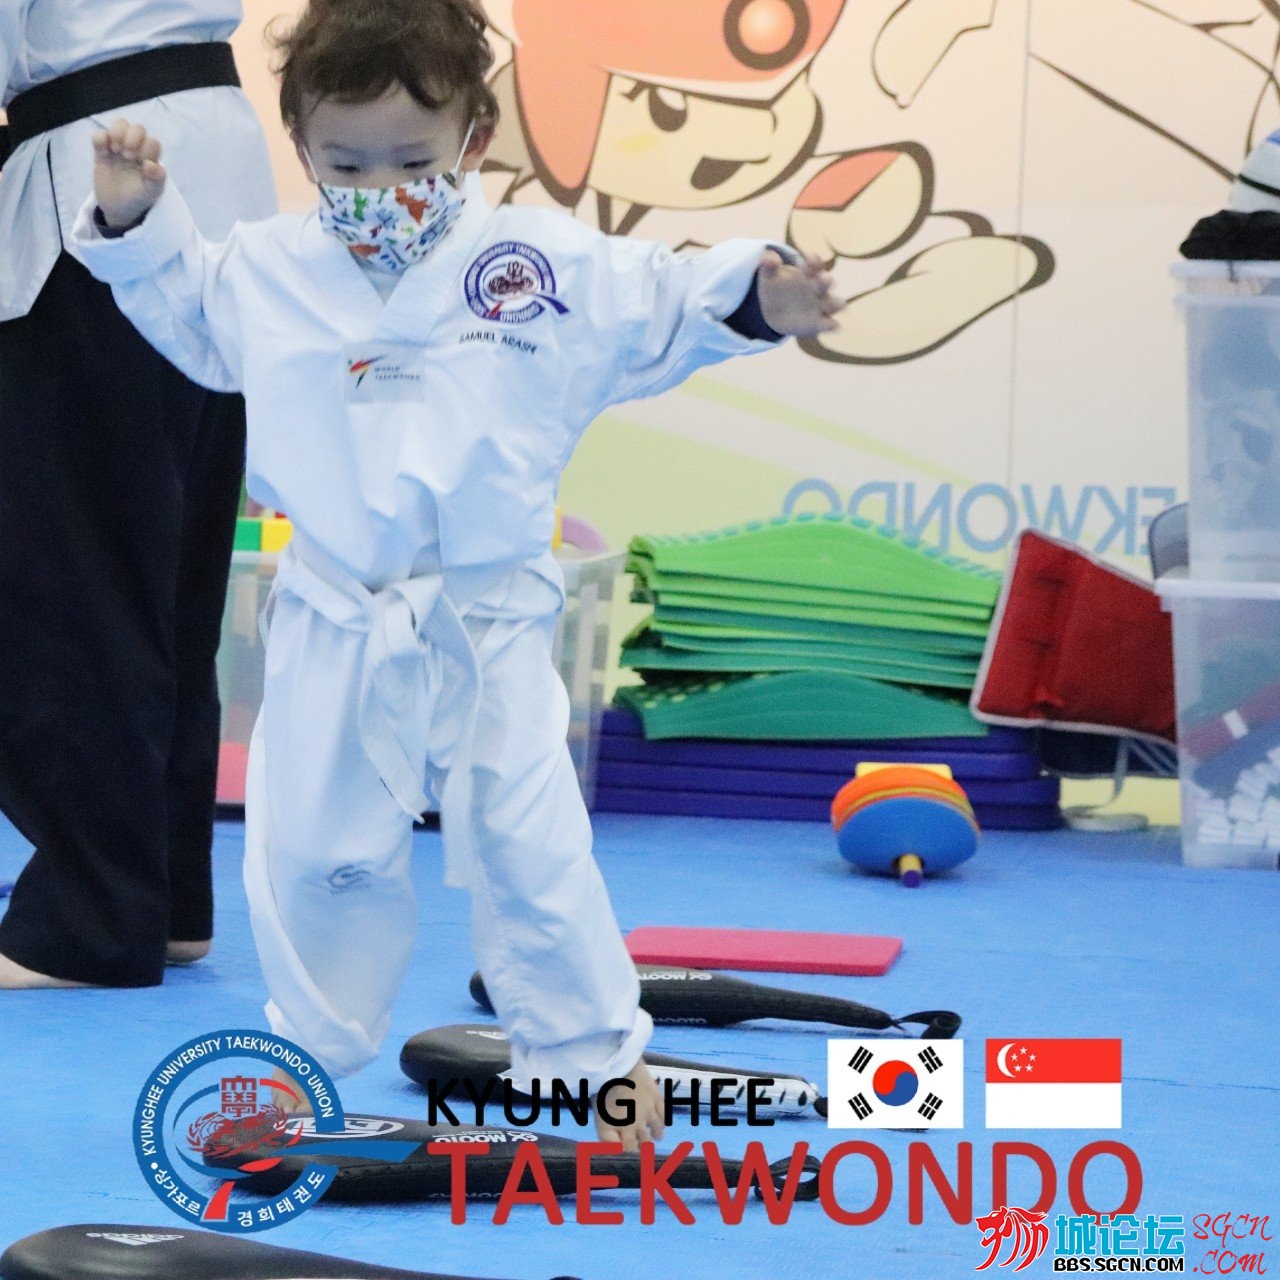 Kyunghee Taekwondo 7.jpg